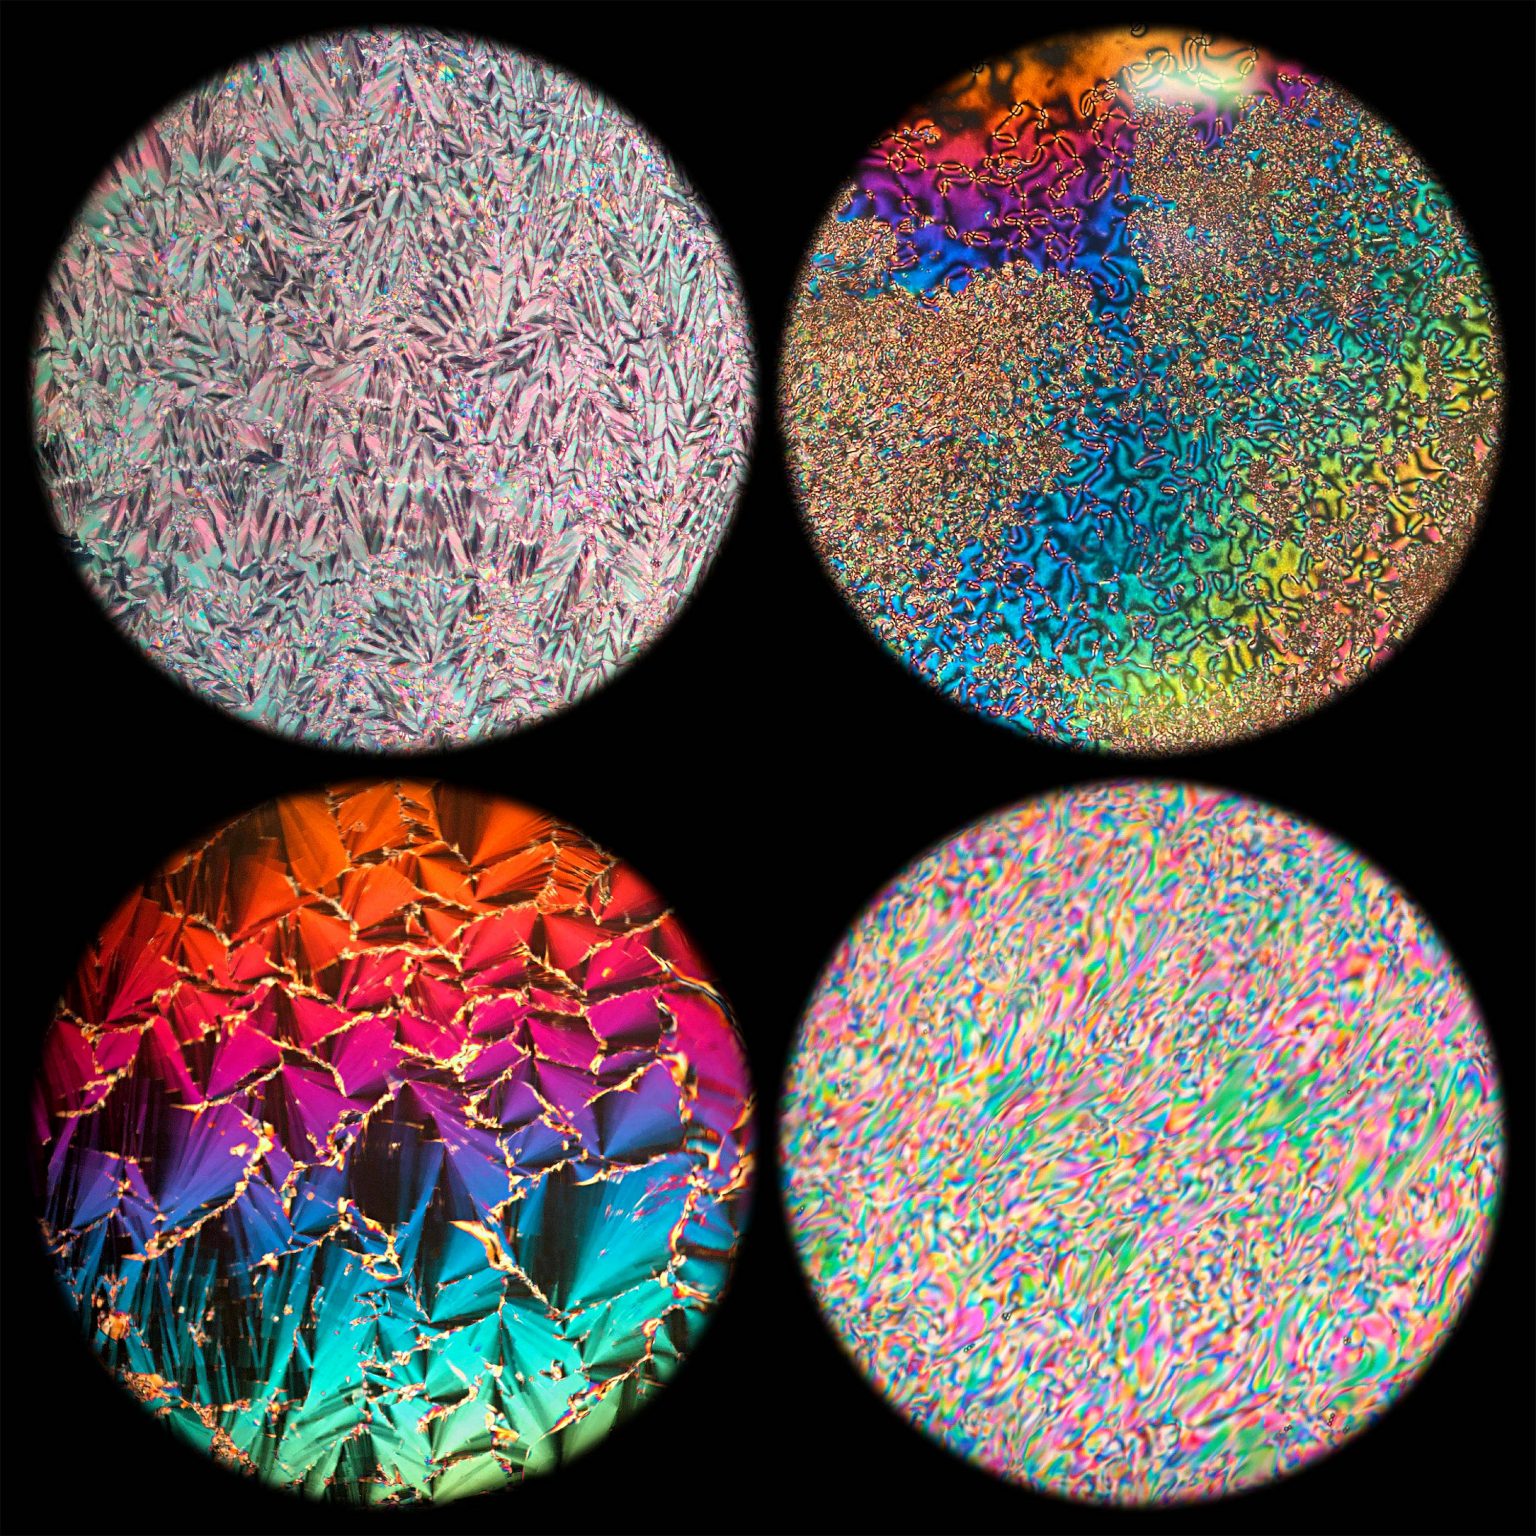 Liquid Crystals image from Yodh / Zagzag